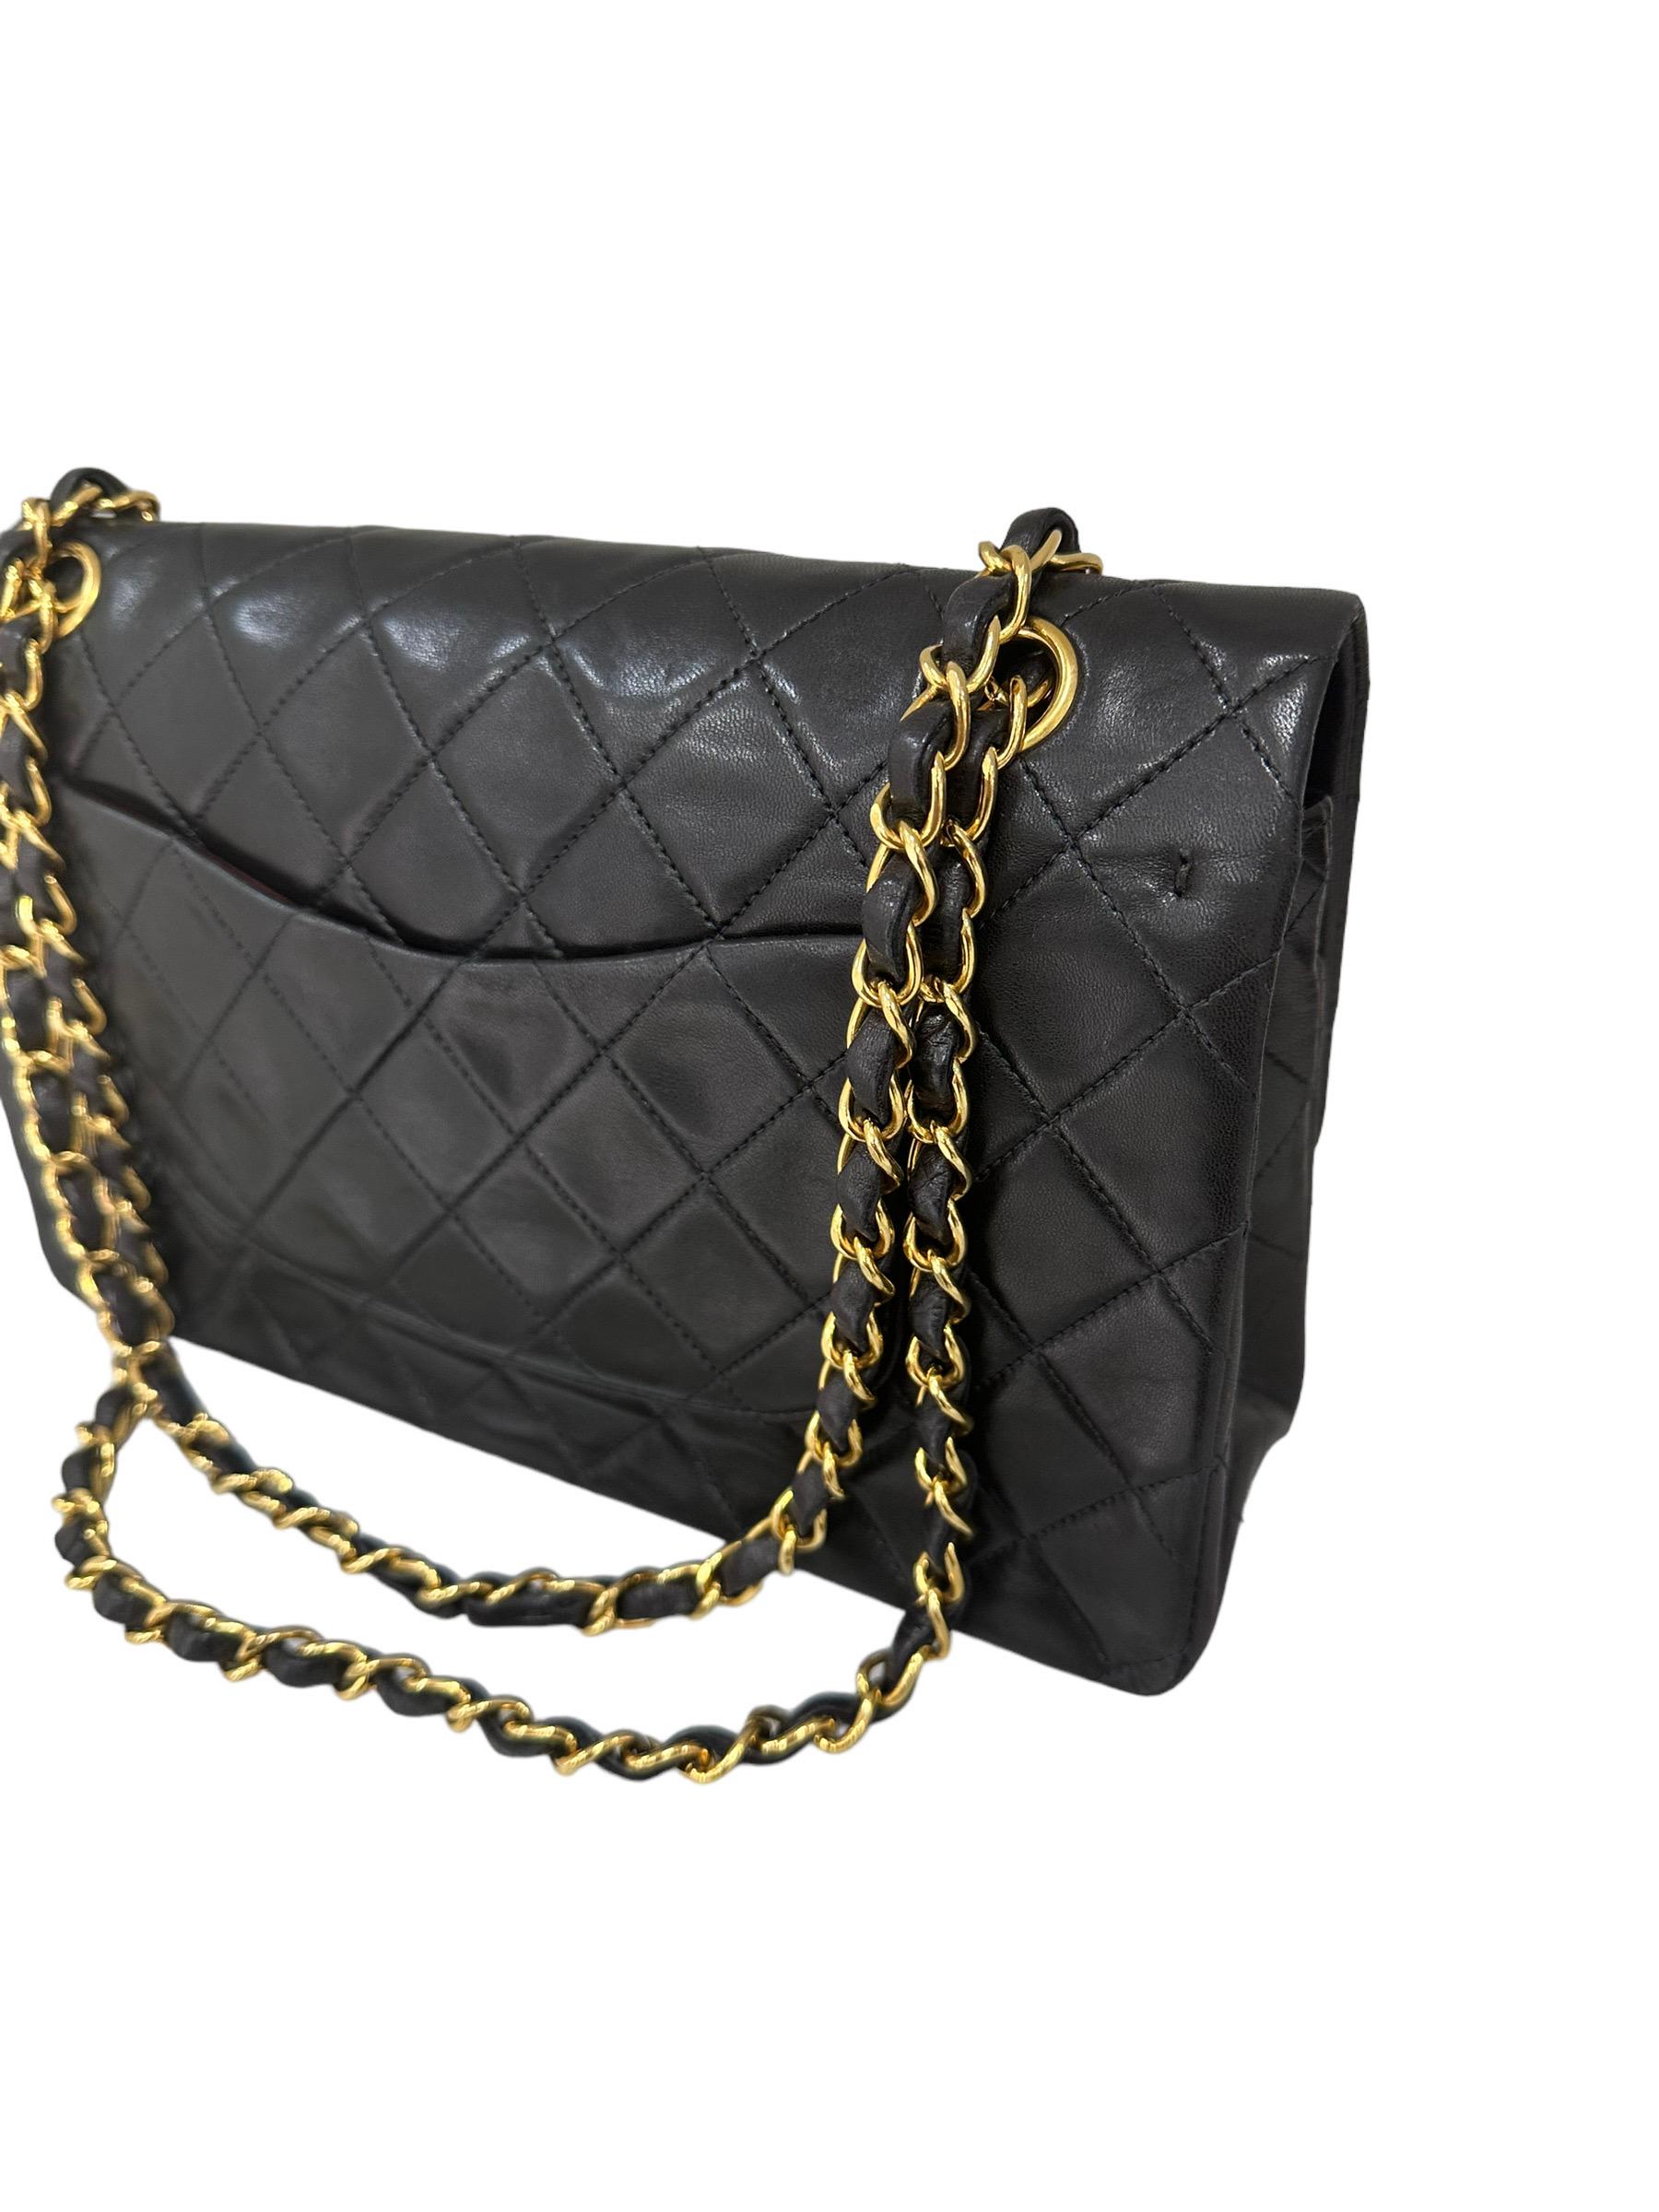 1996 Chanel Timeless Classic 2.55 Black Leather Top Shoulder Bag For Sale 2